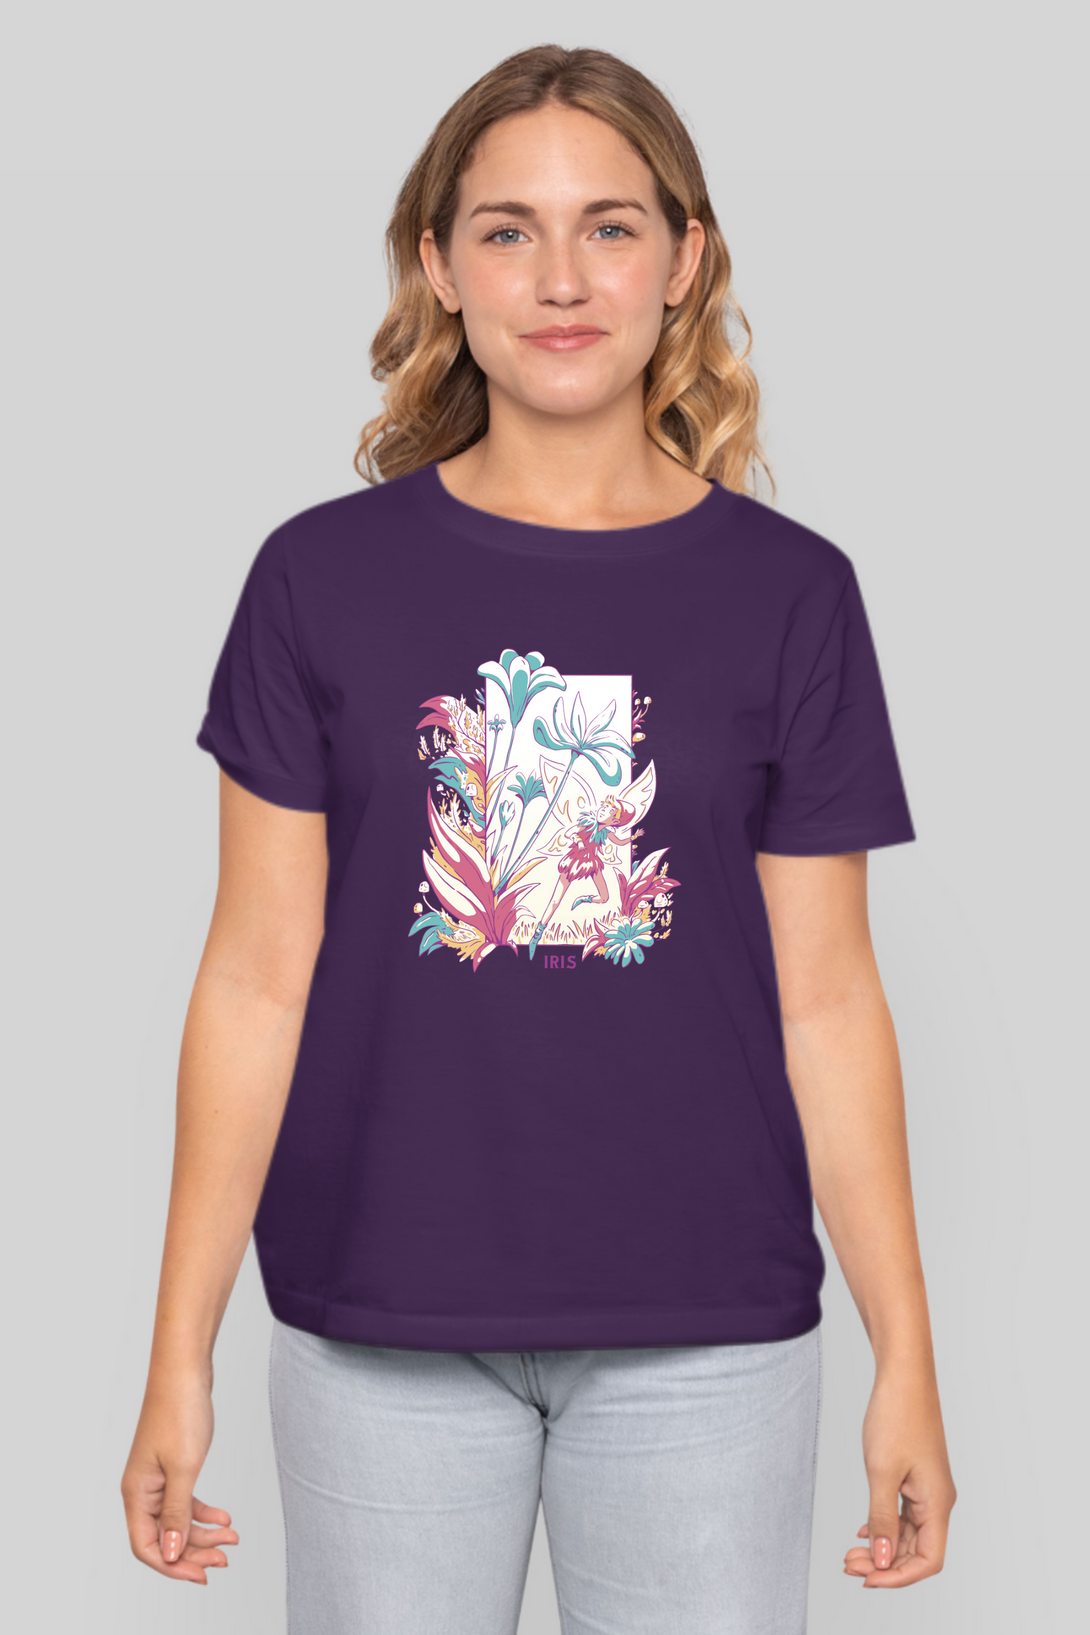 Fairy Blossom Printed T-Shirt For Women - WowWaves - 10